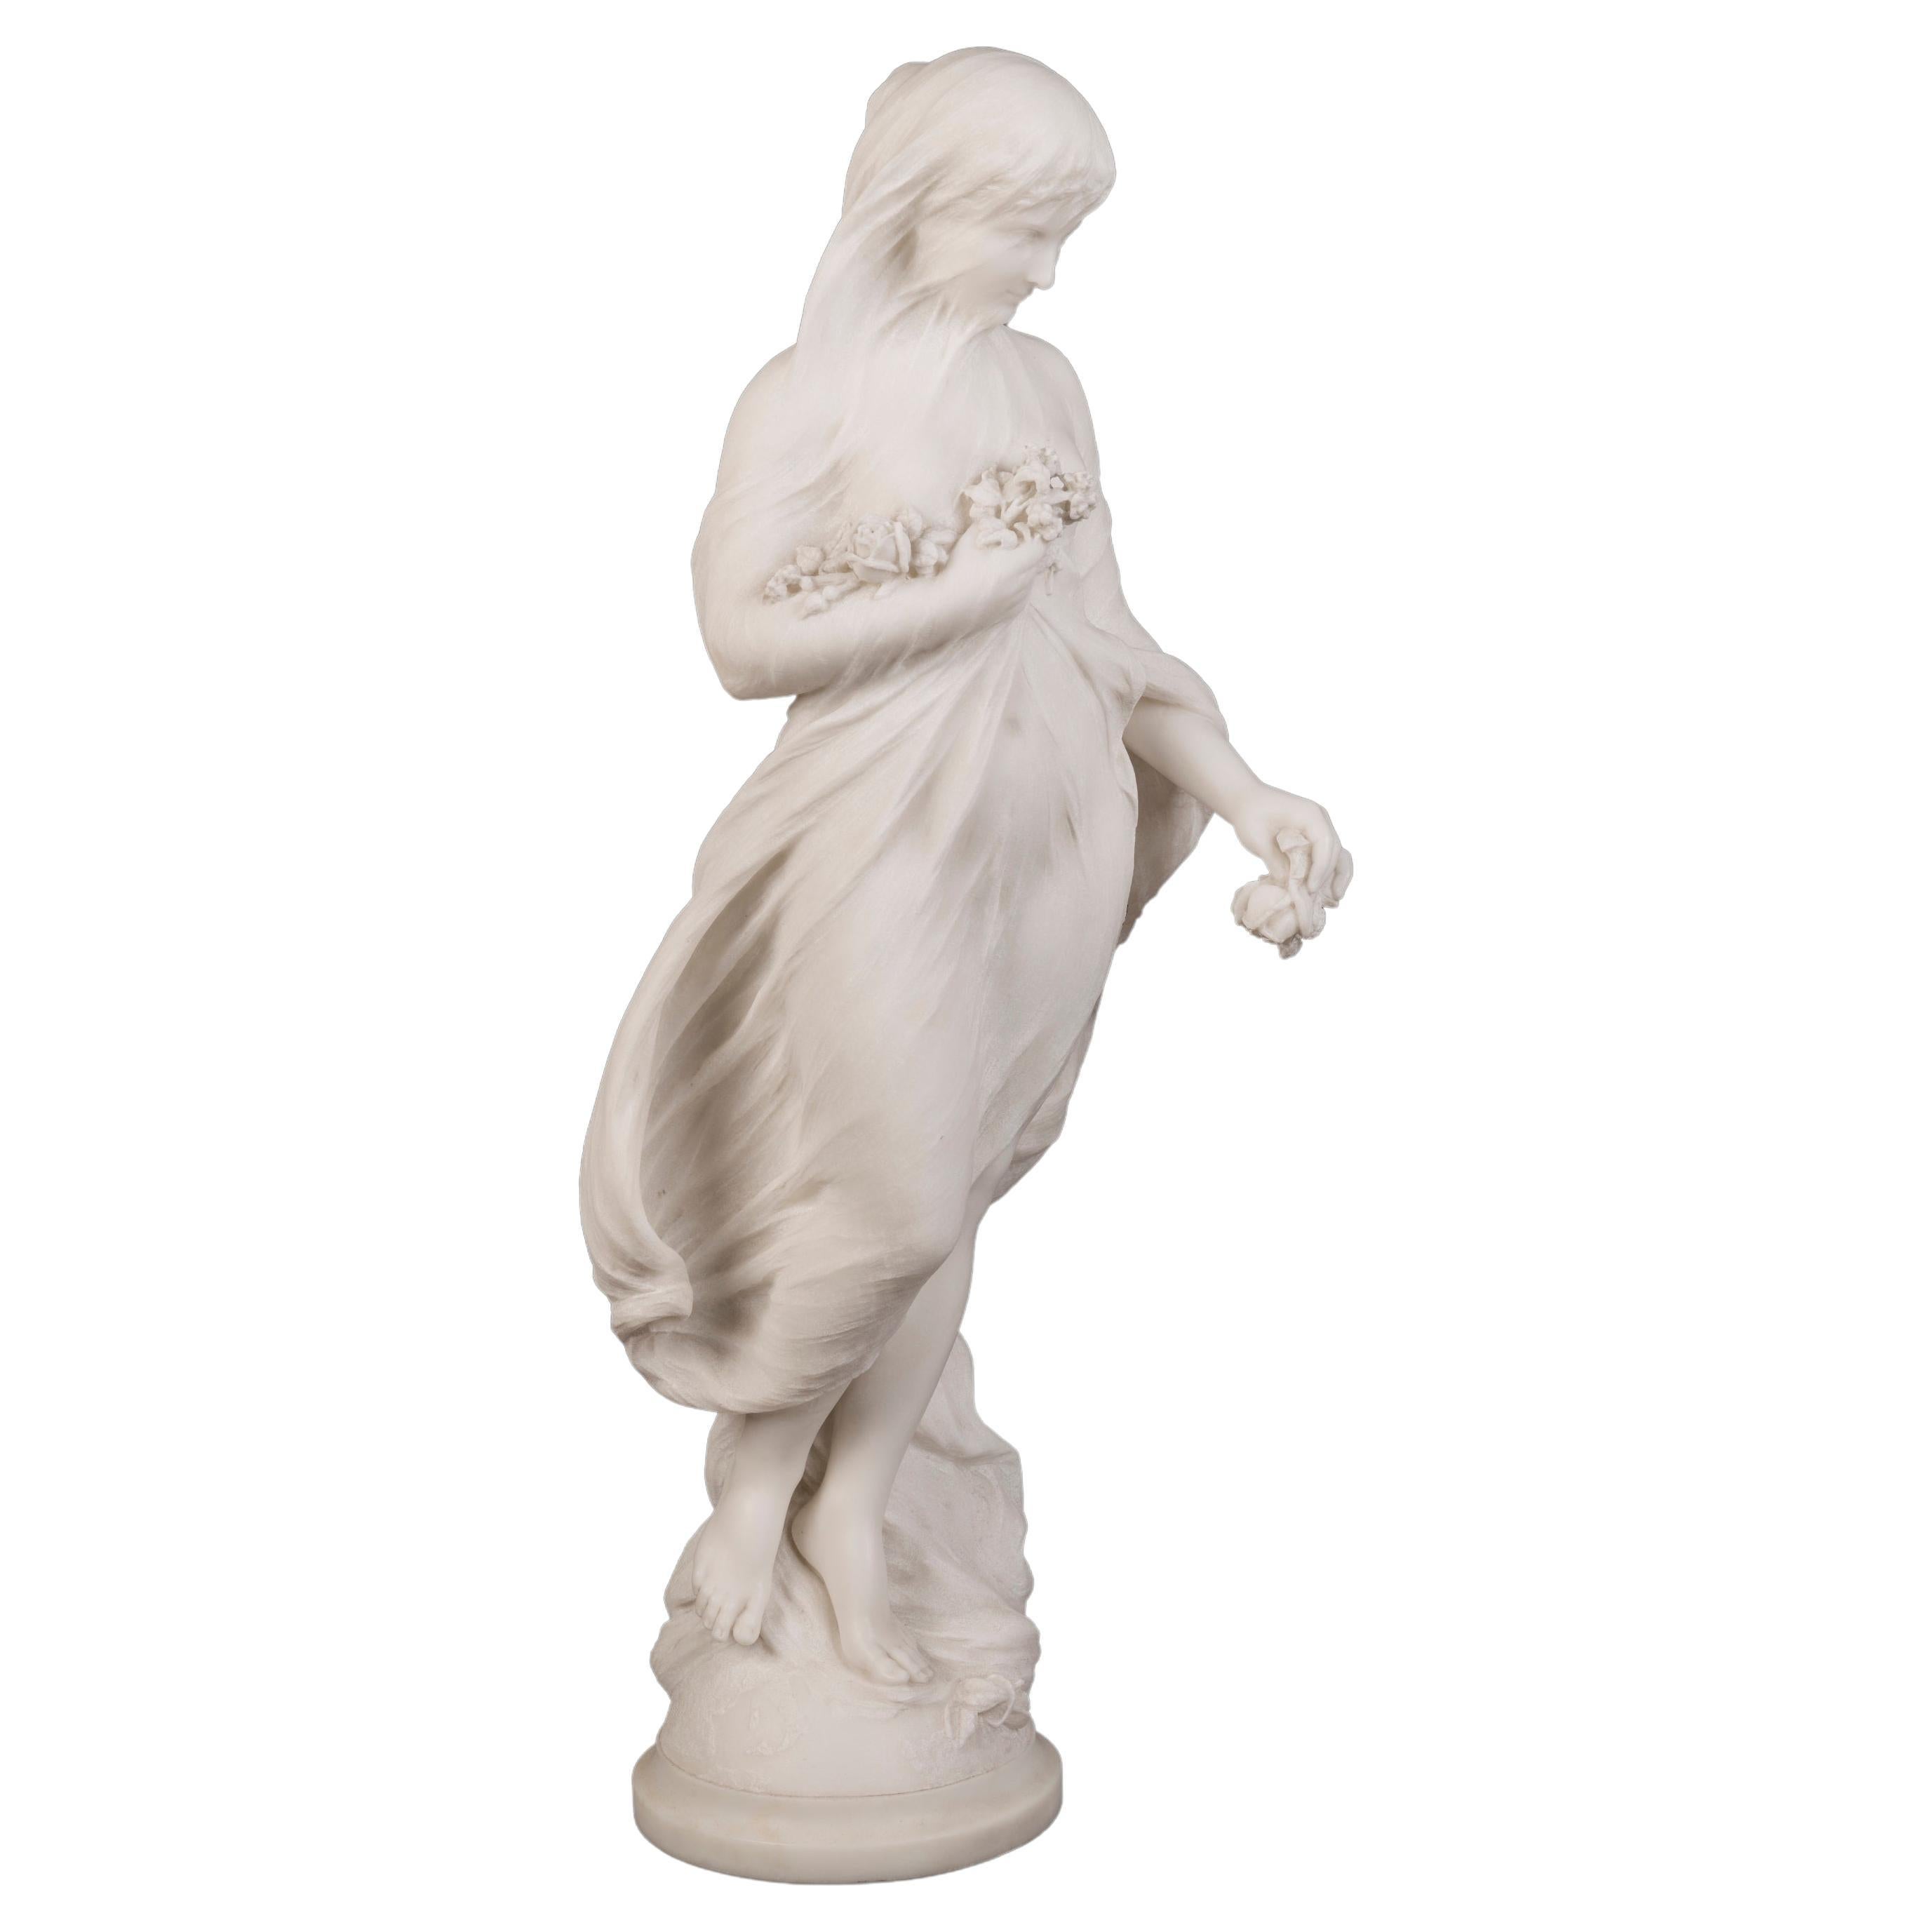 19th Century Italian Marble Sculpture of the Goddess Flora by Ernesto Gazzeri